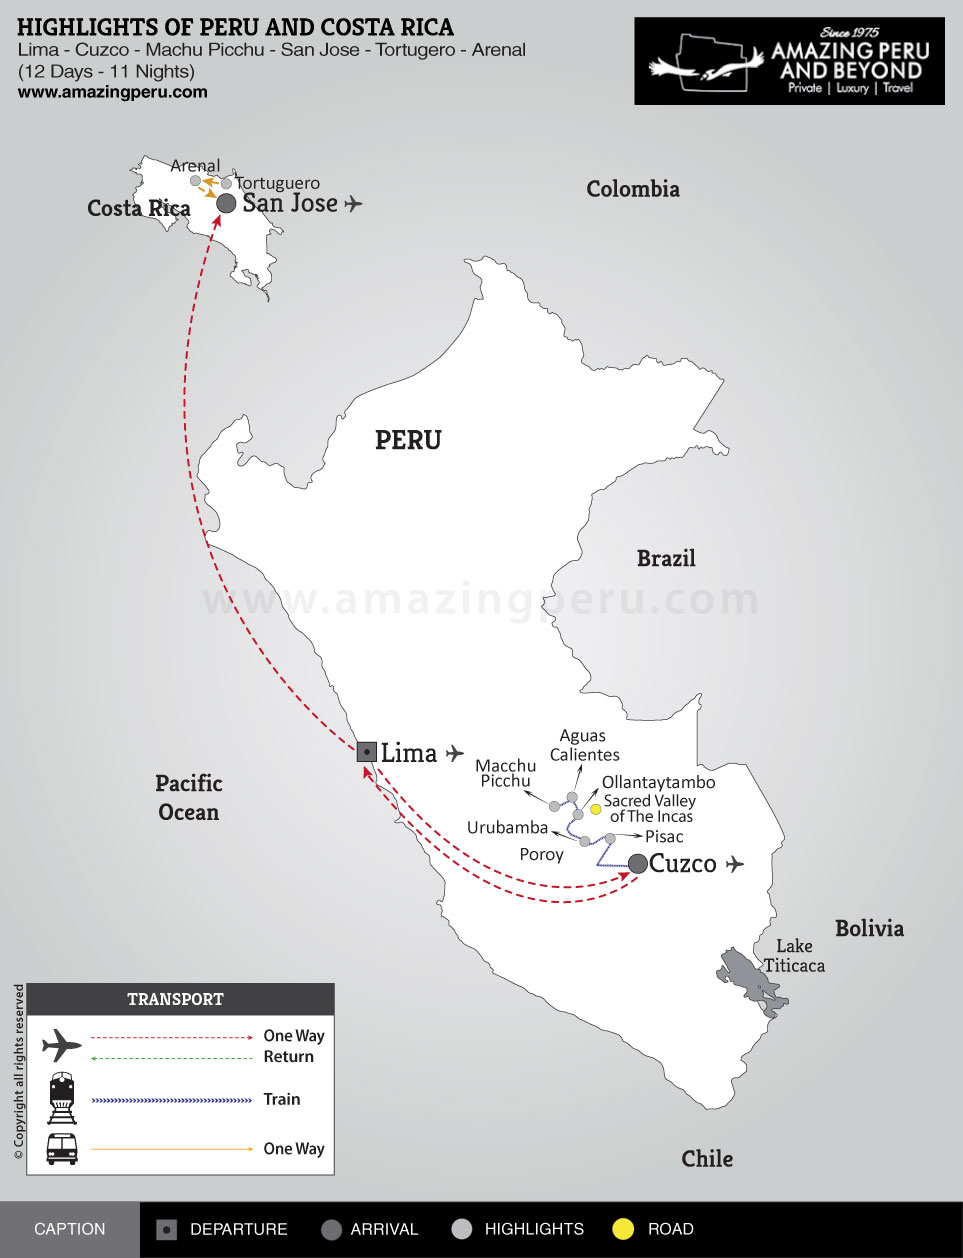 Highlights of Peru and Costa Rica - 12 days / 11 nights.